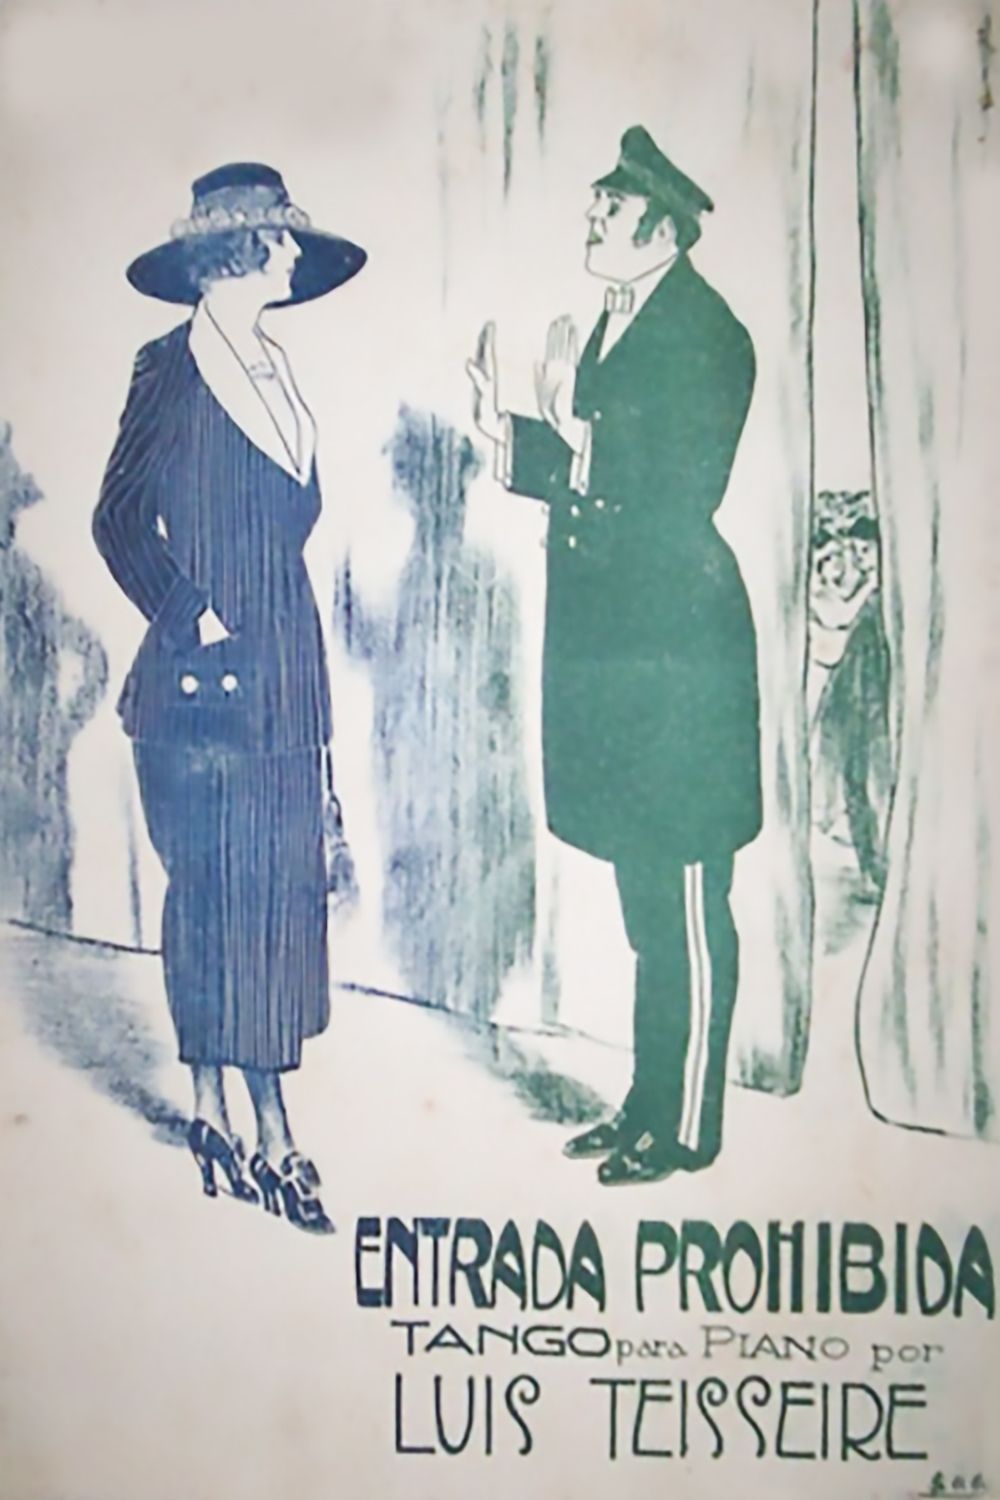 'Entrada prohibida', Argentine Tango music sheet cover.